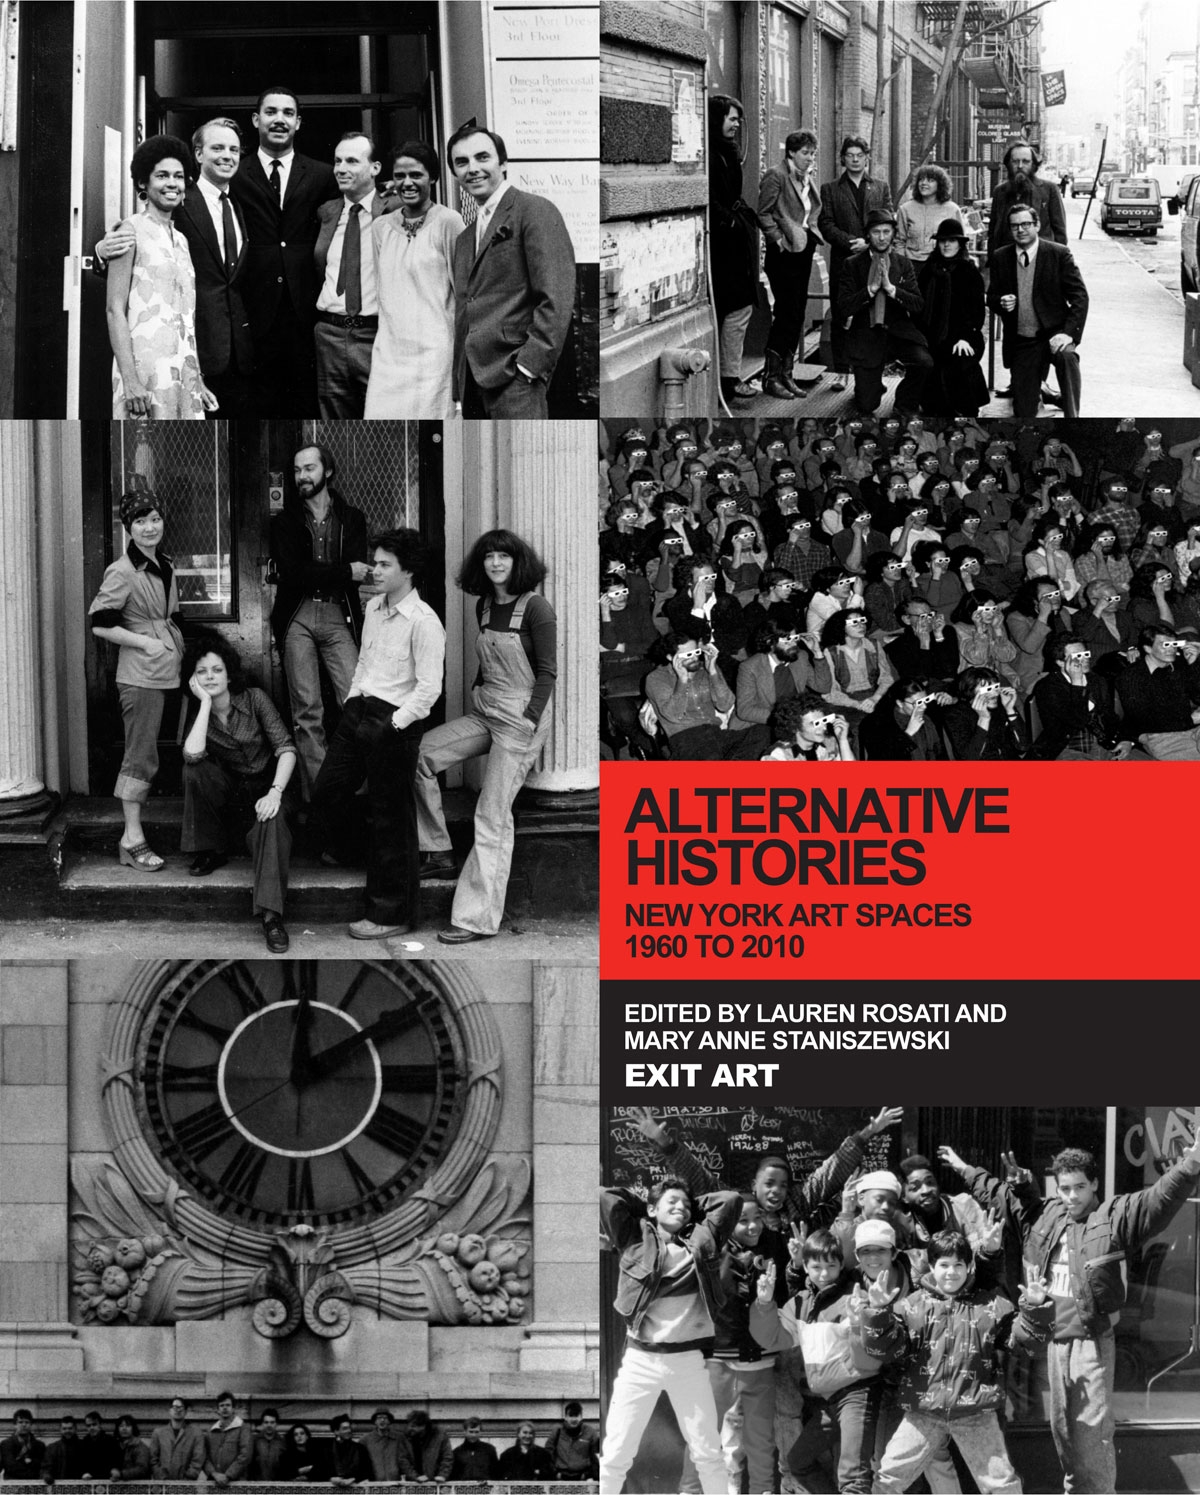 Alternative Histories: New York Art Spaces, Edited by Lauren Rosati and Mary Anne Staniszewski,